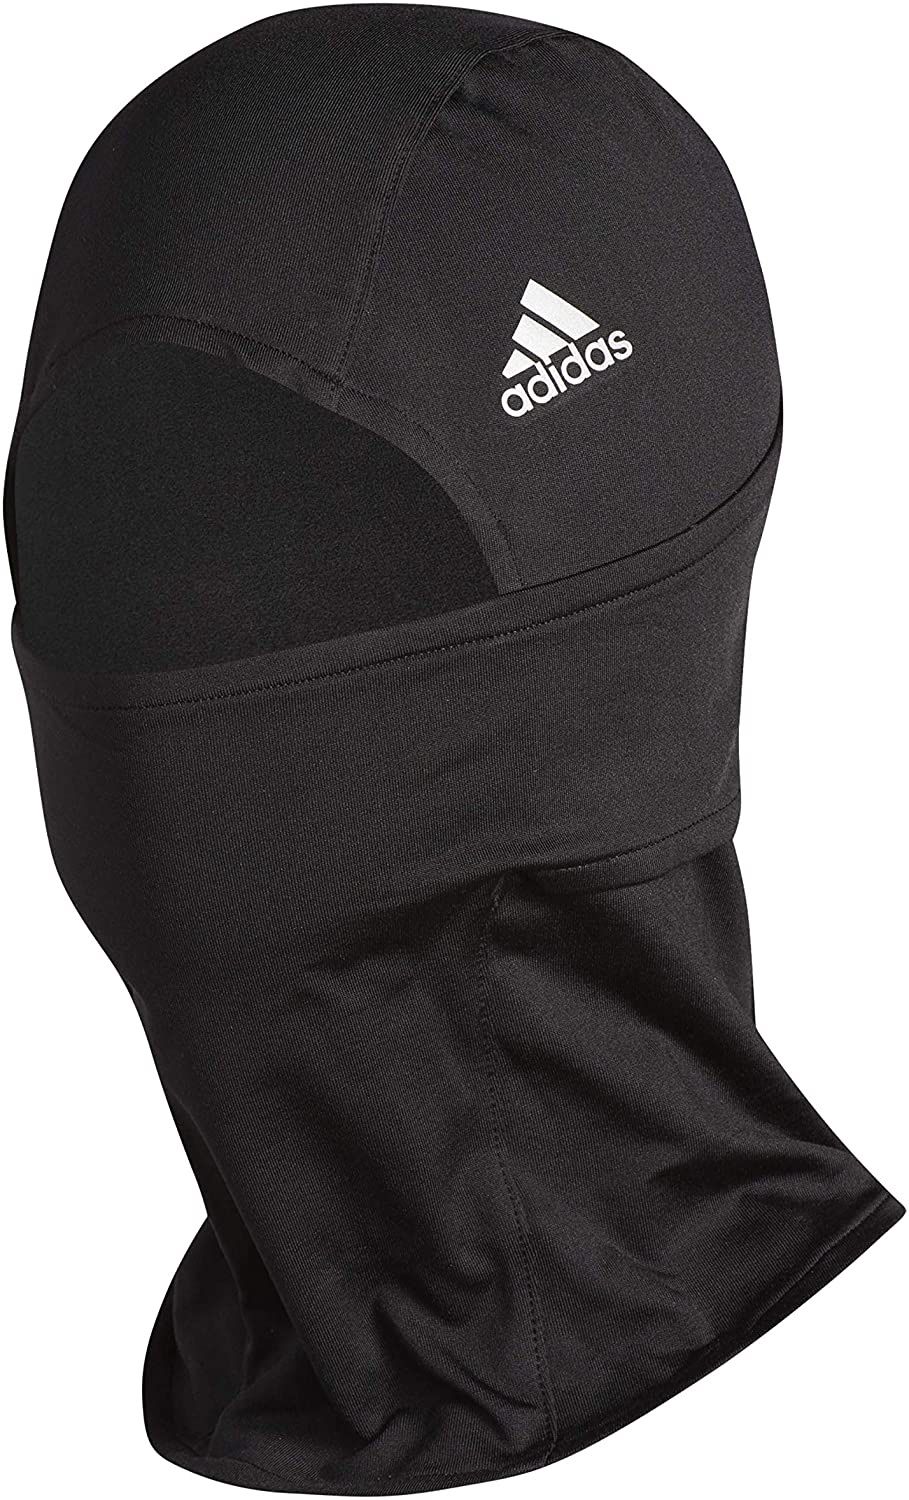 Adidas Alphaskin Full facial protection. Ski Mask, face cover, balaclava, neckwarmer